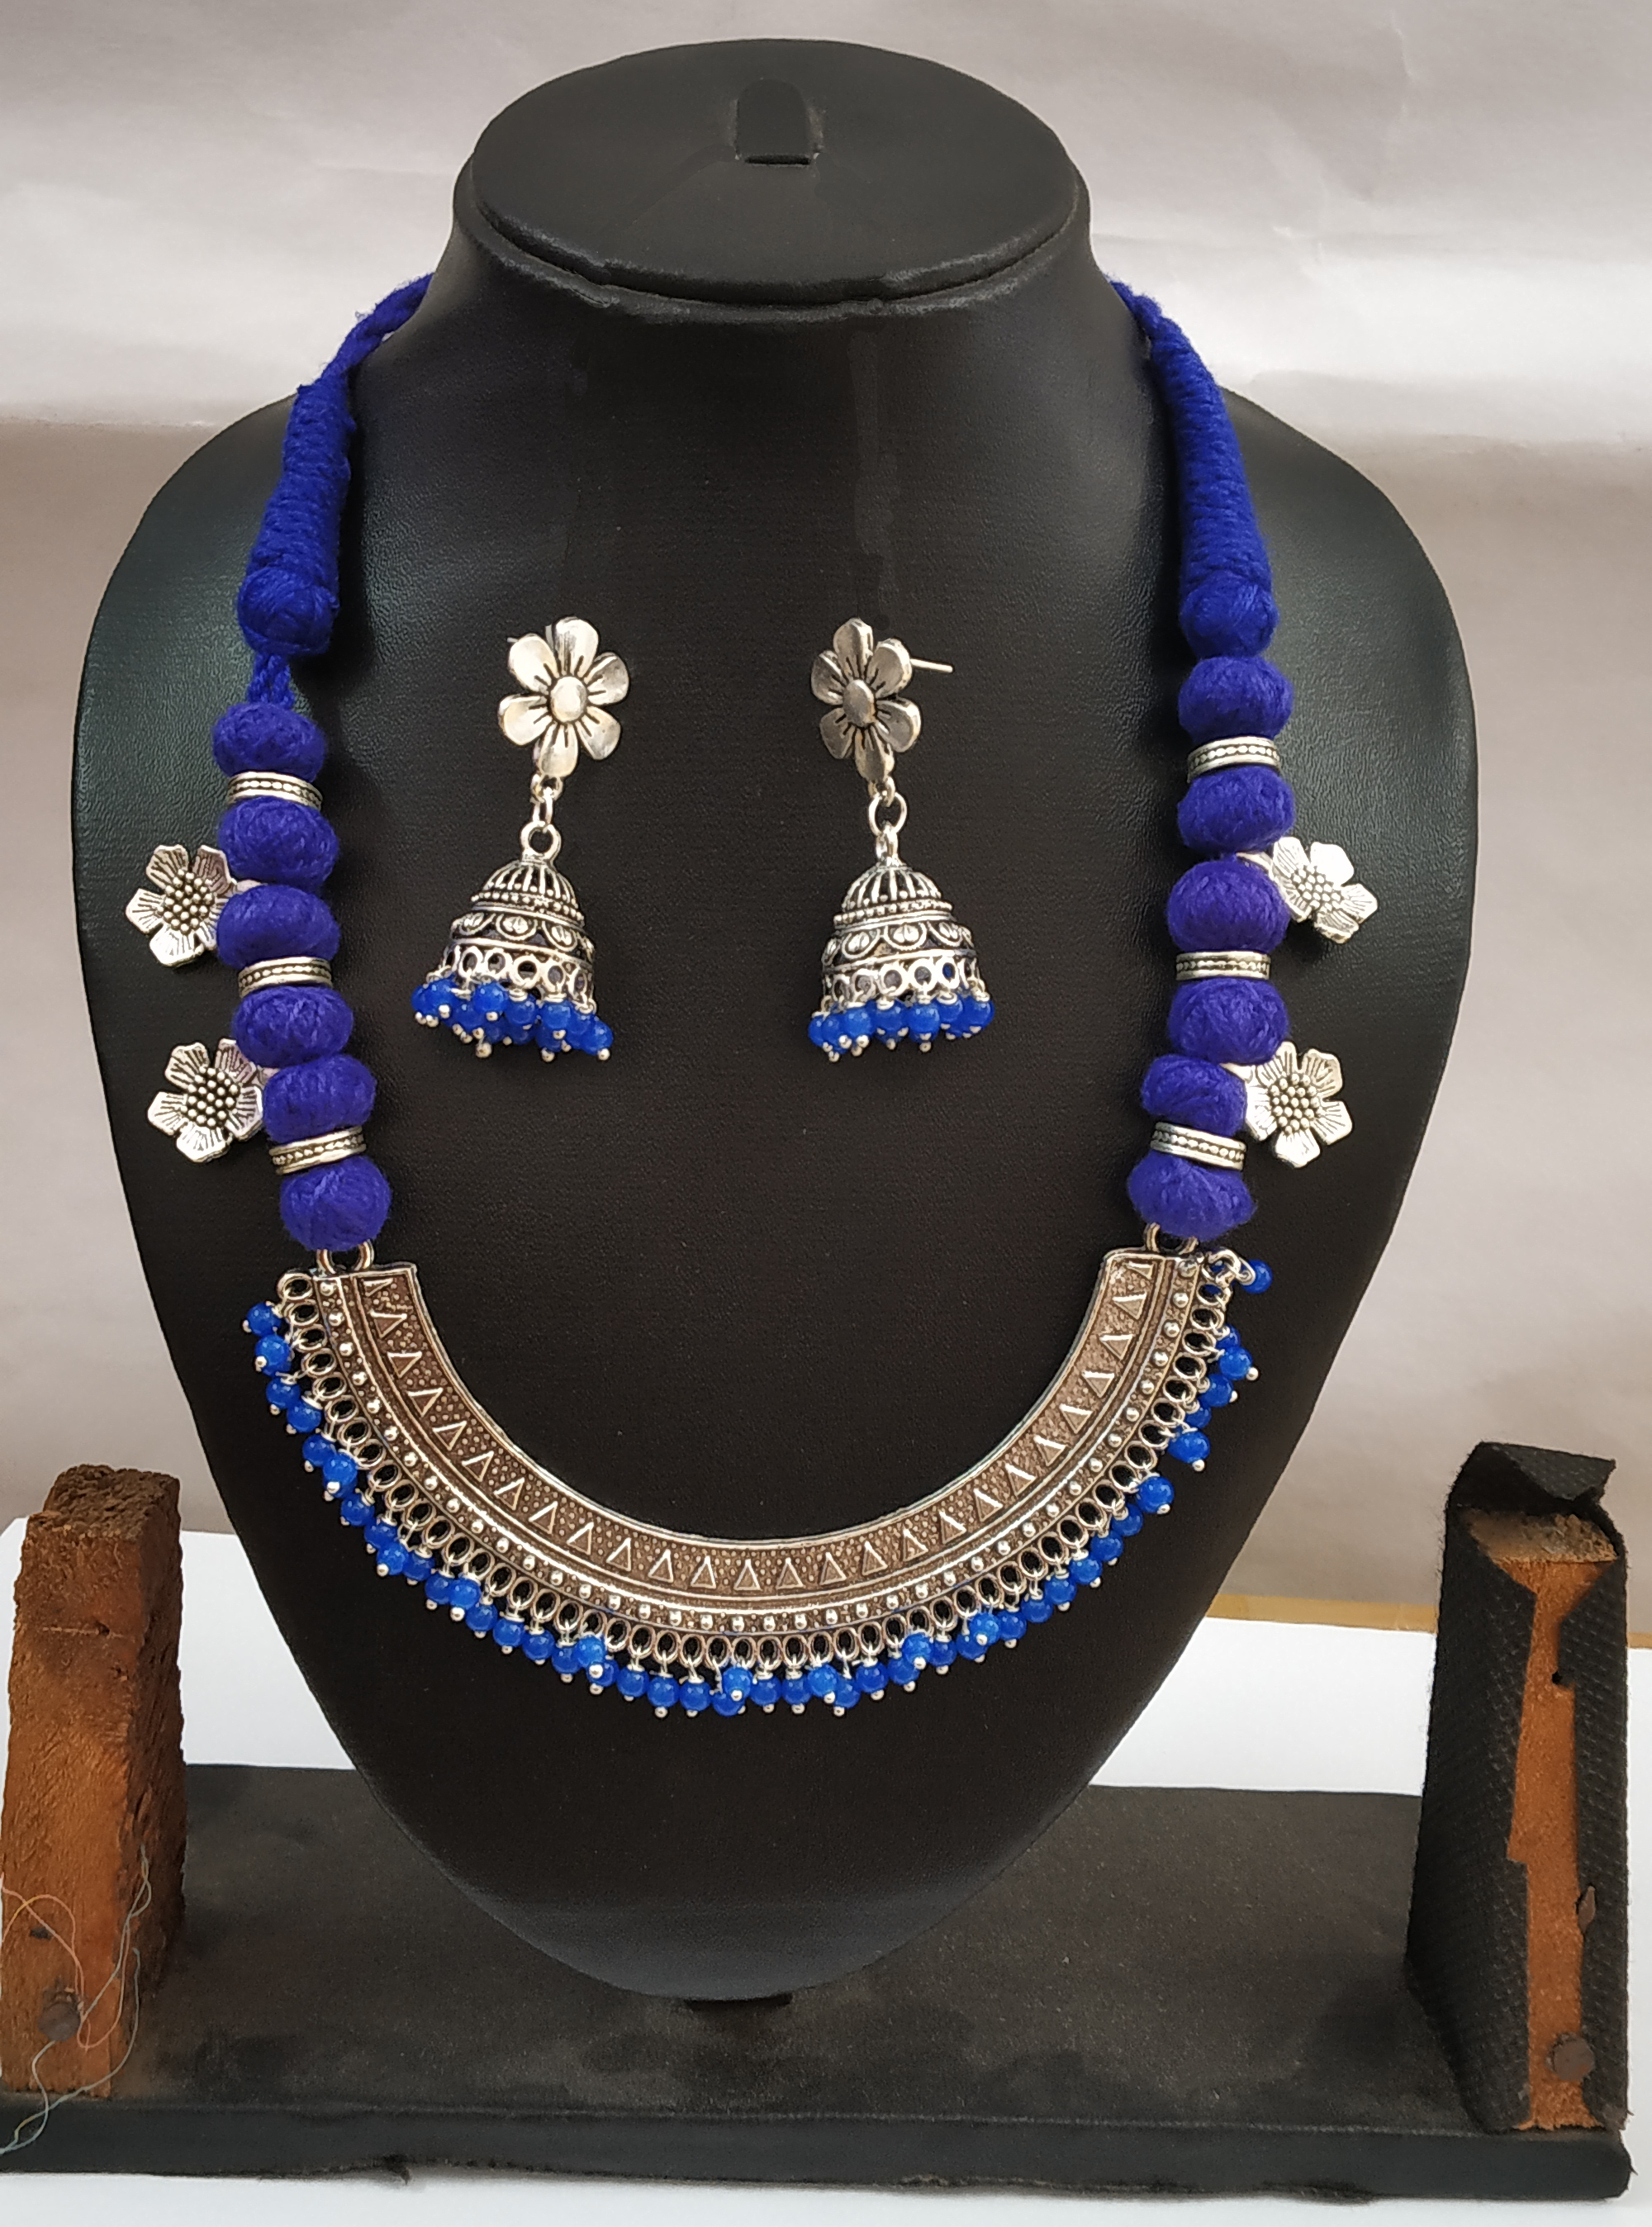 Designer Oxidized Pendant Threaded Necklace